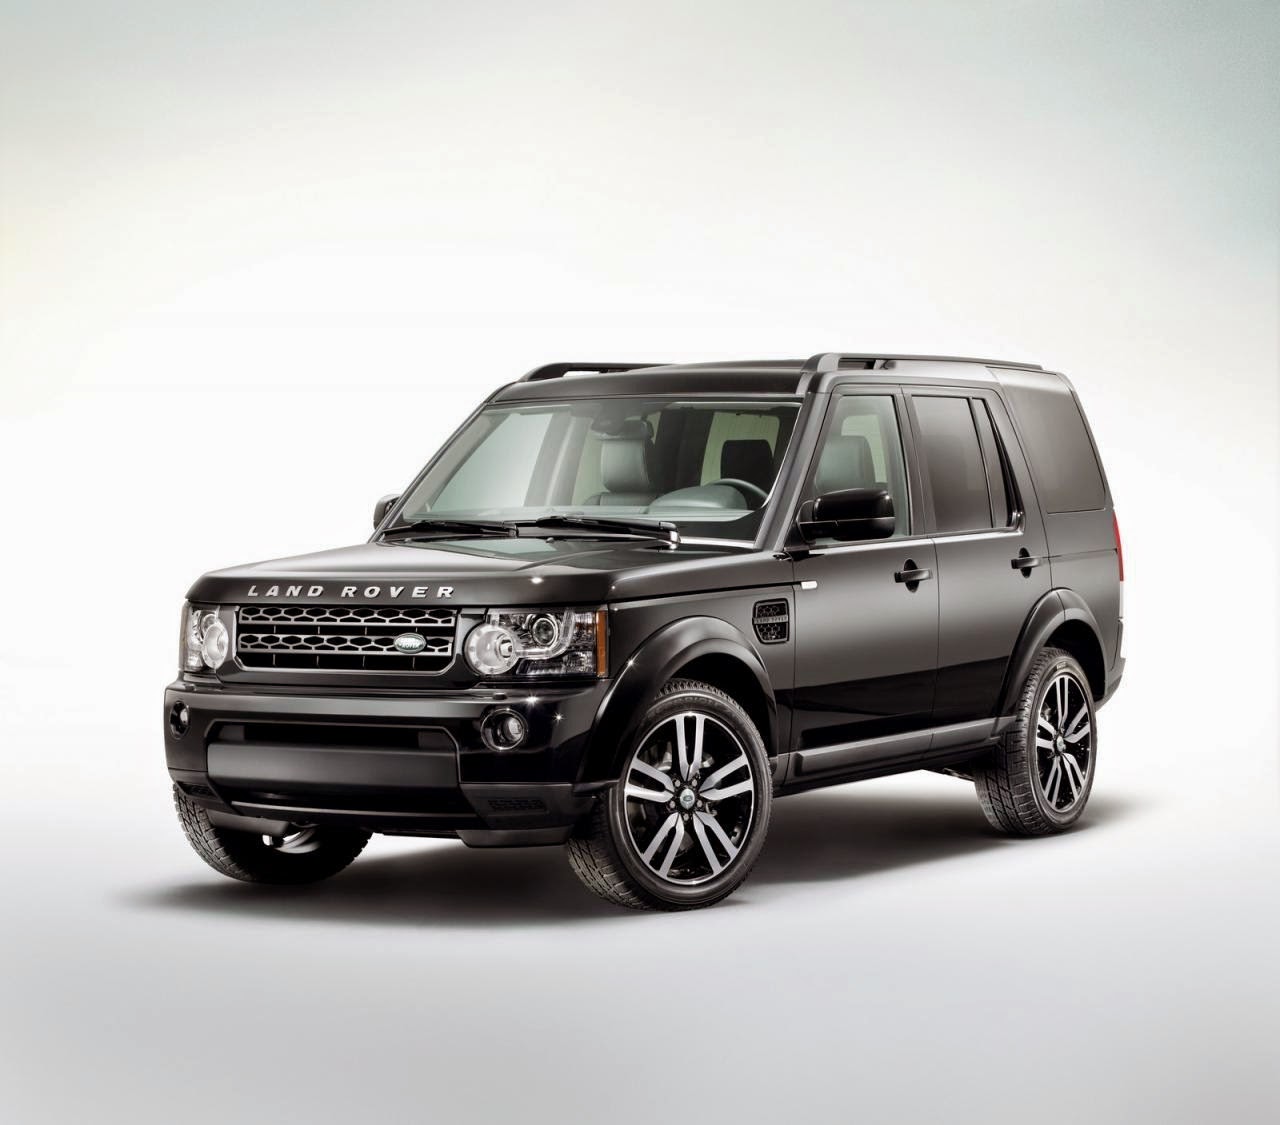 2015 Land Rover Discovery 4 Car Reviews All4fun